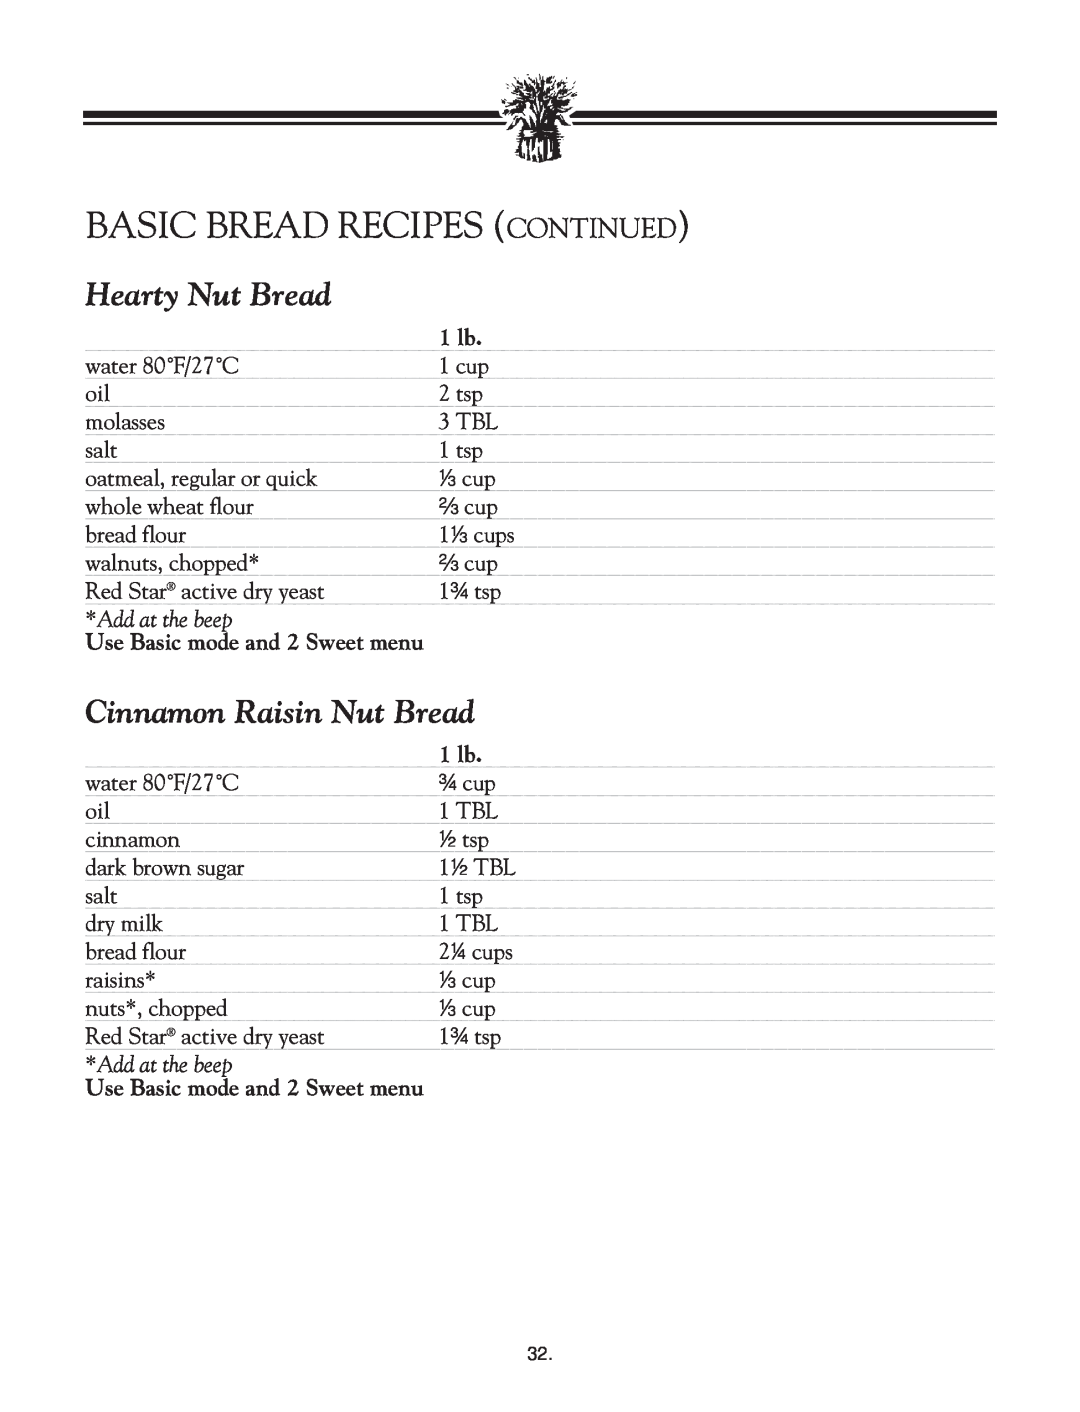 Breadman TR2828G Hearty Nut Bread, Cinnamon Raisin Nut Bread, Add at the beep, Basic Bread Recipes Continued 